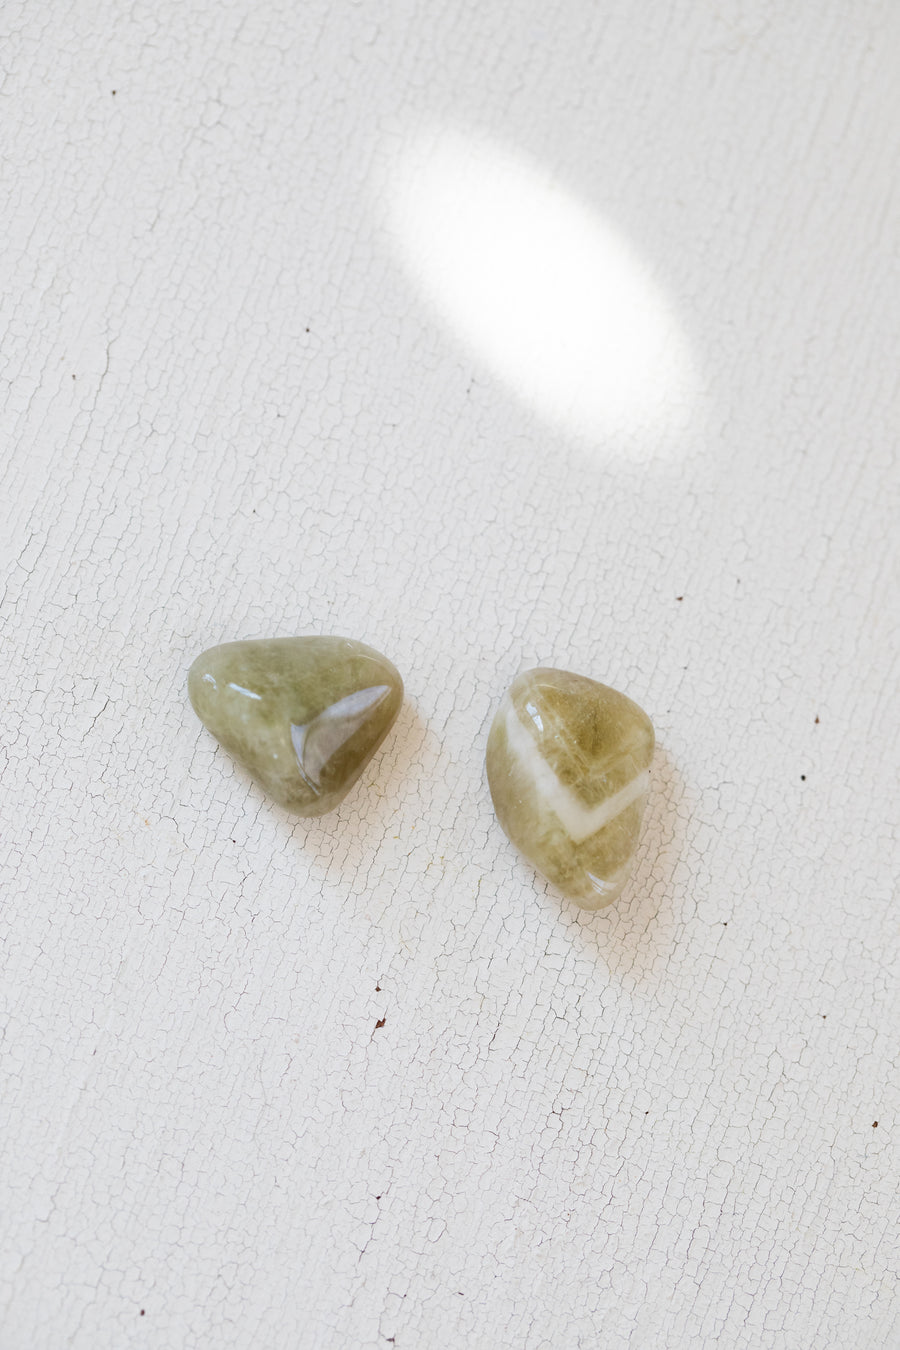 Prasiolite - Green Amethyst, Tumbled